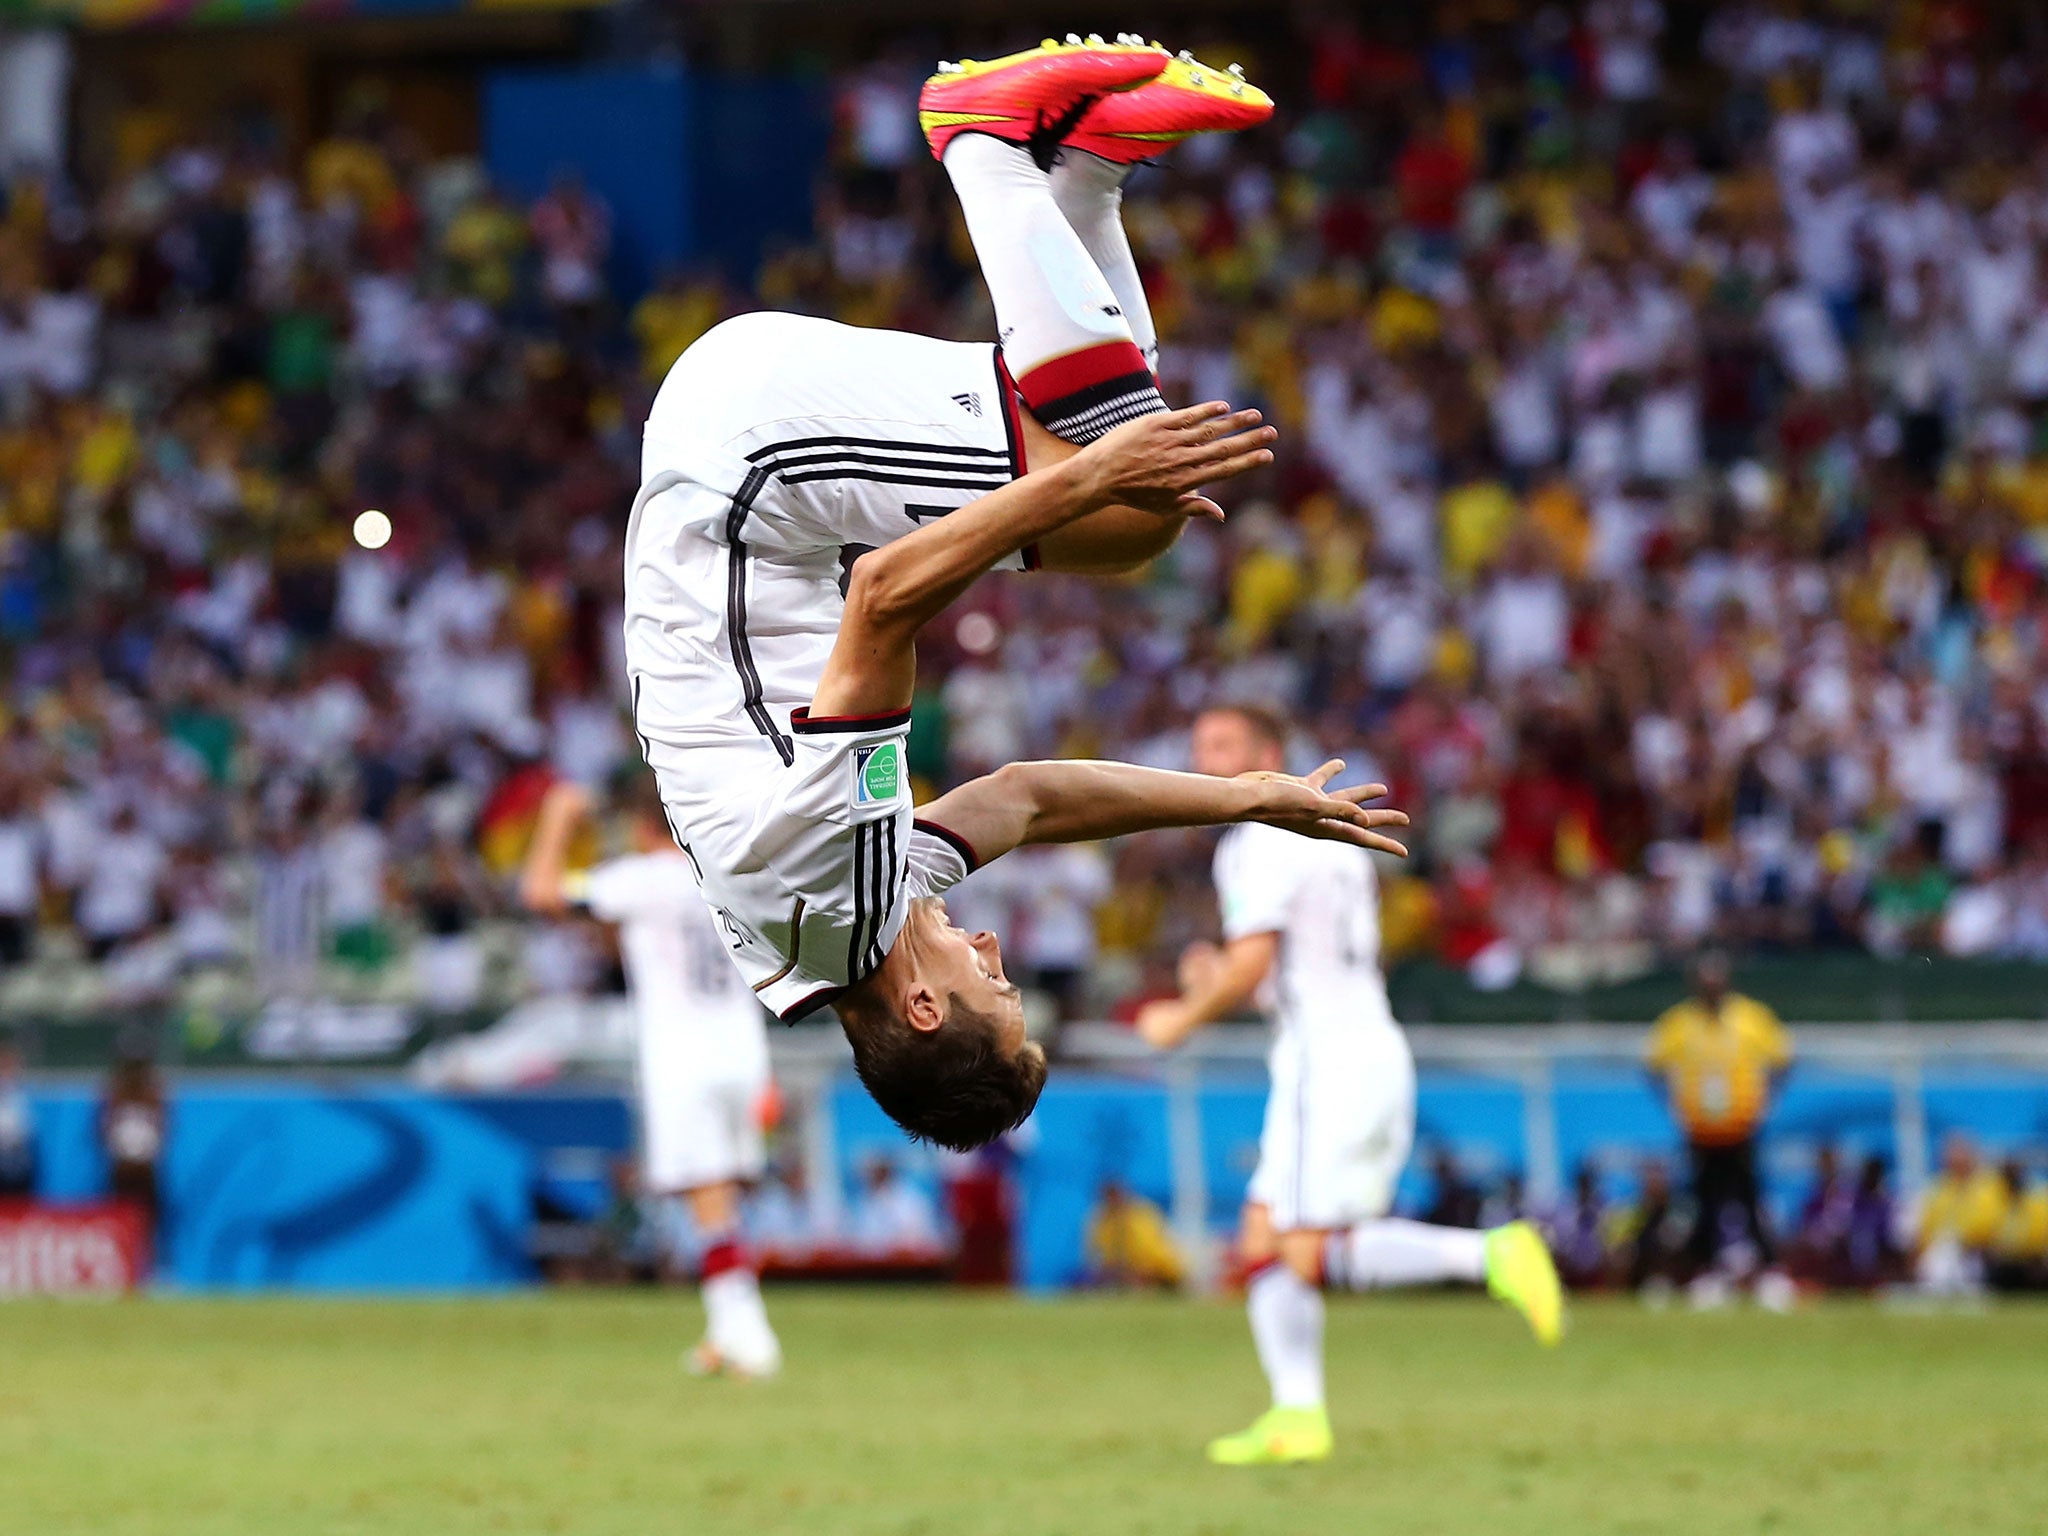 Miroslav Klose’s celebration is copied around the world